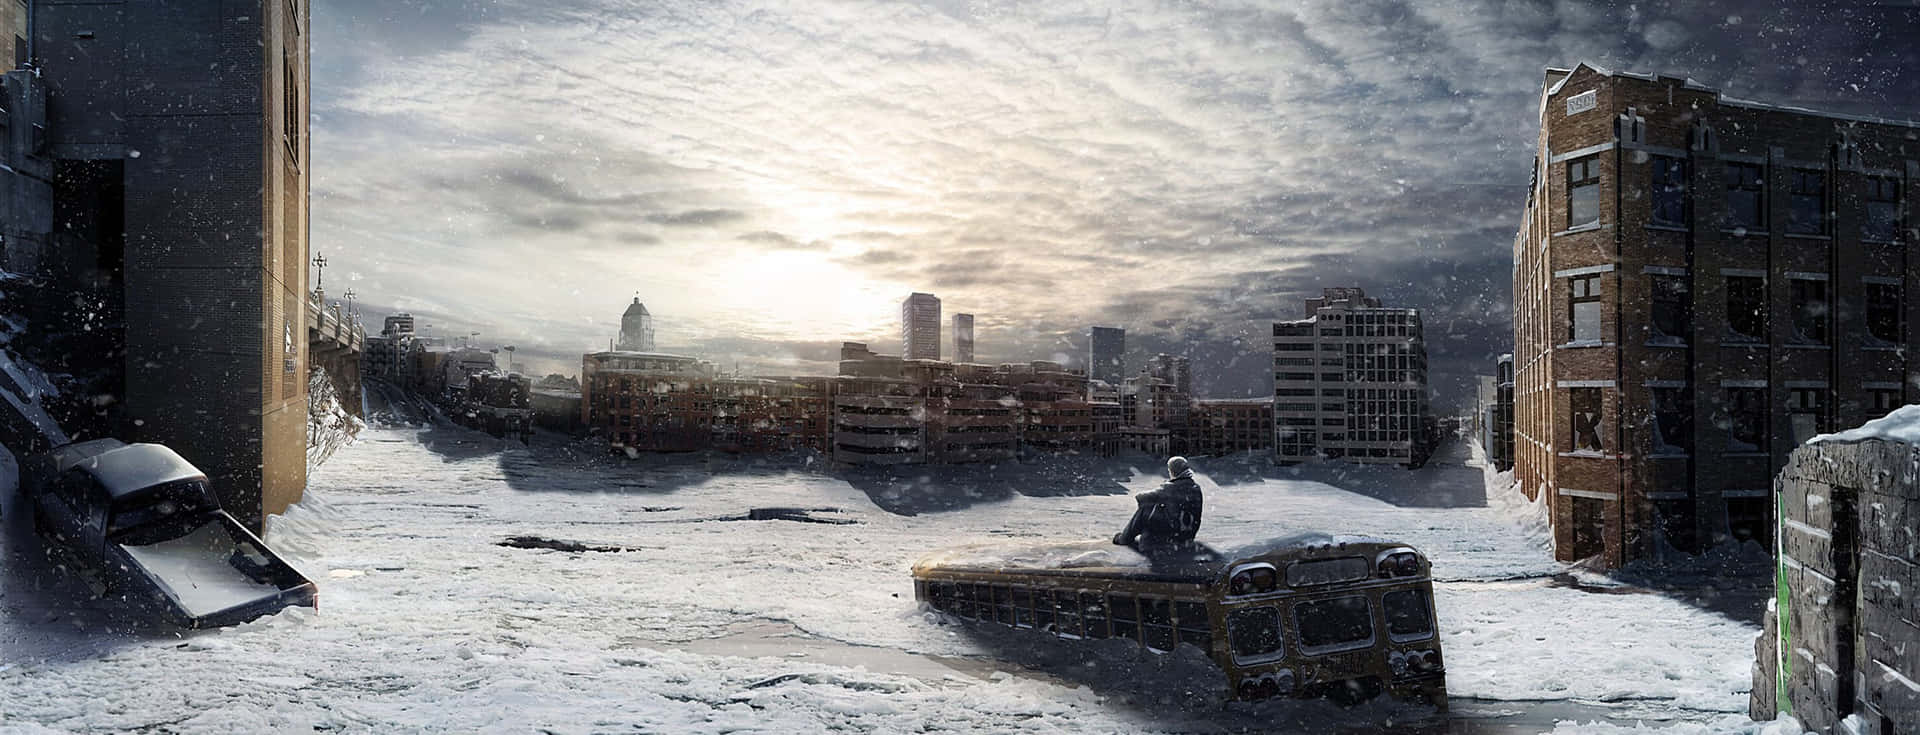 Surreal Nuclear Winter Landscape Wallpaper